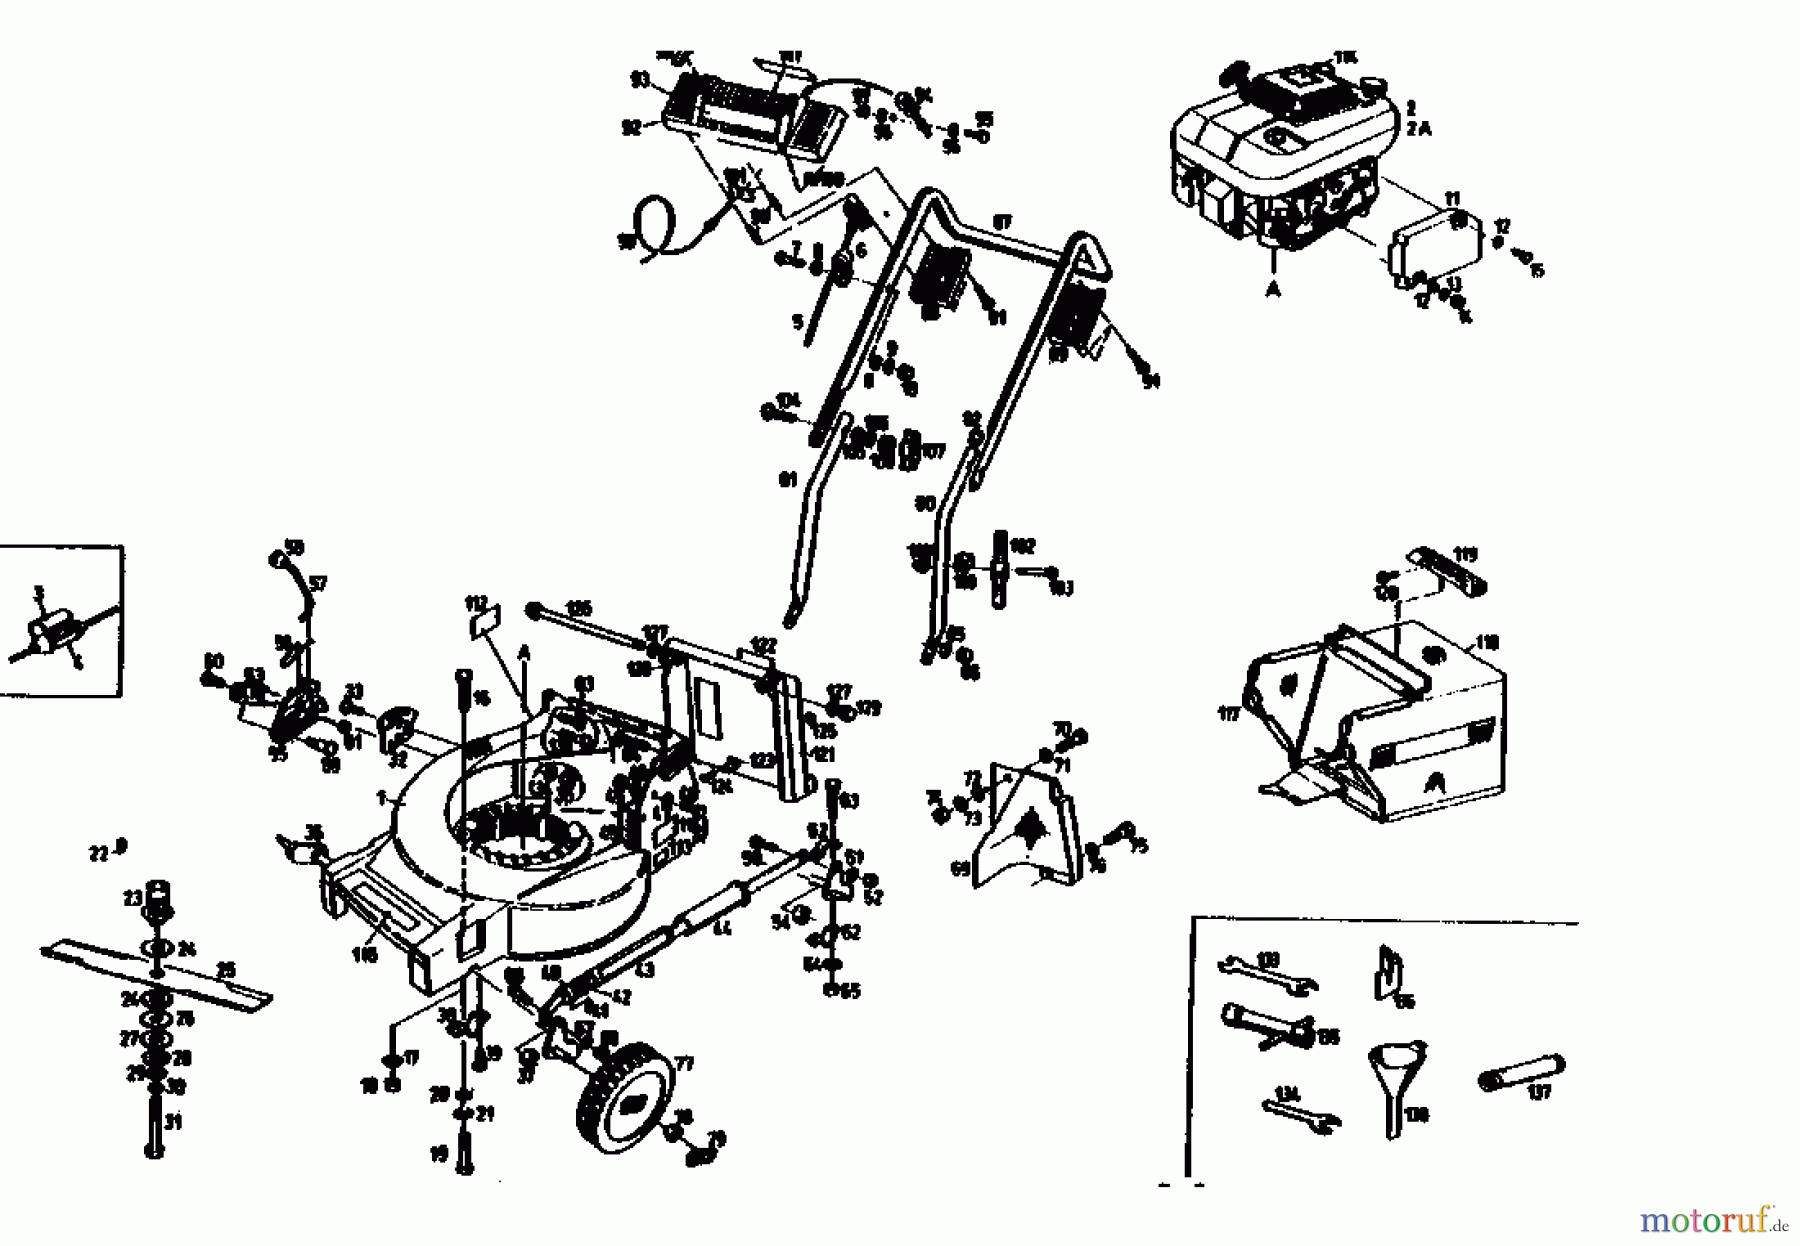  Gutbrod Petrol mower MH 534 04005.02  (1990) Basic machine